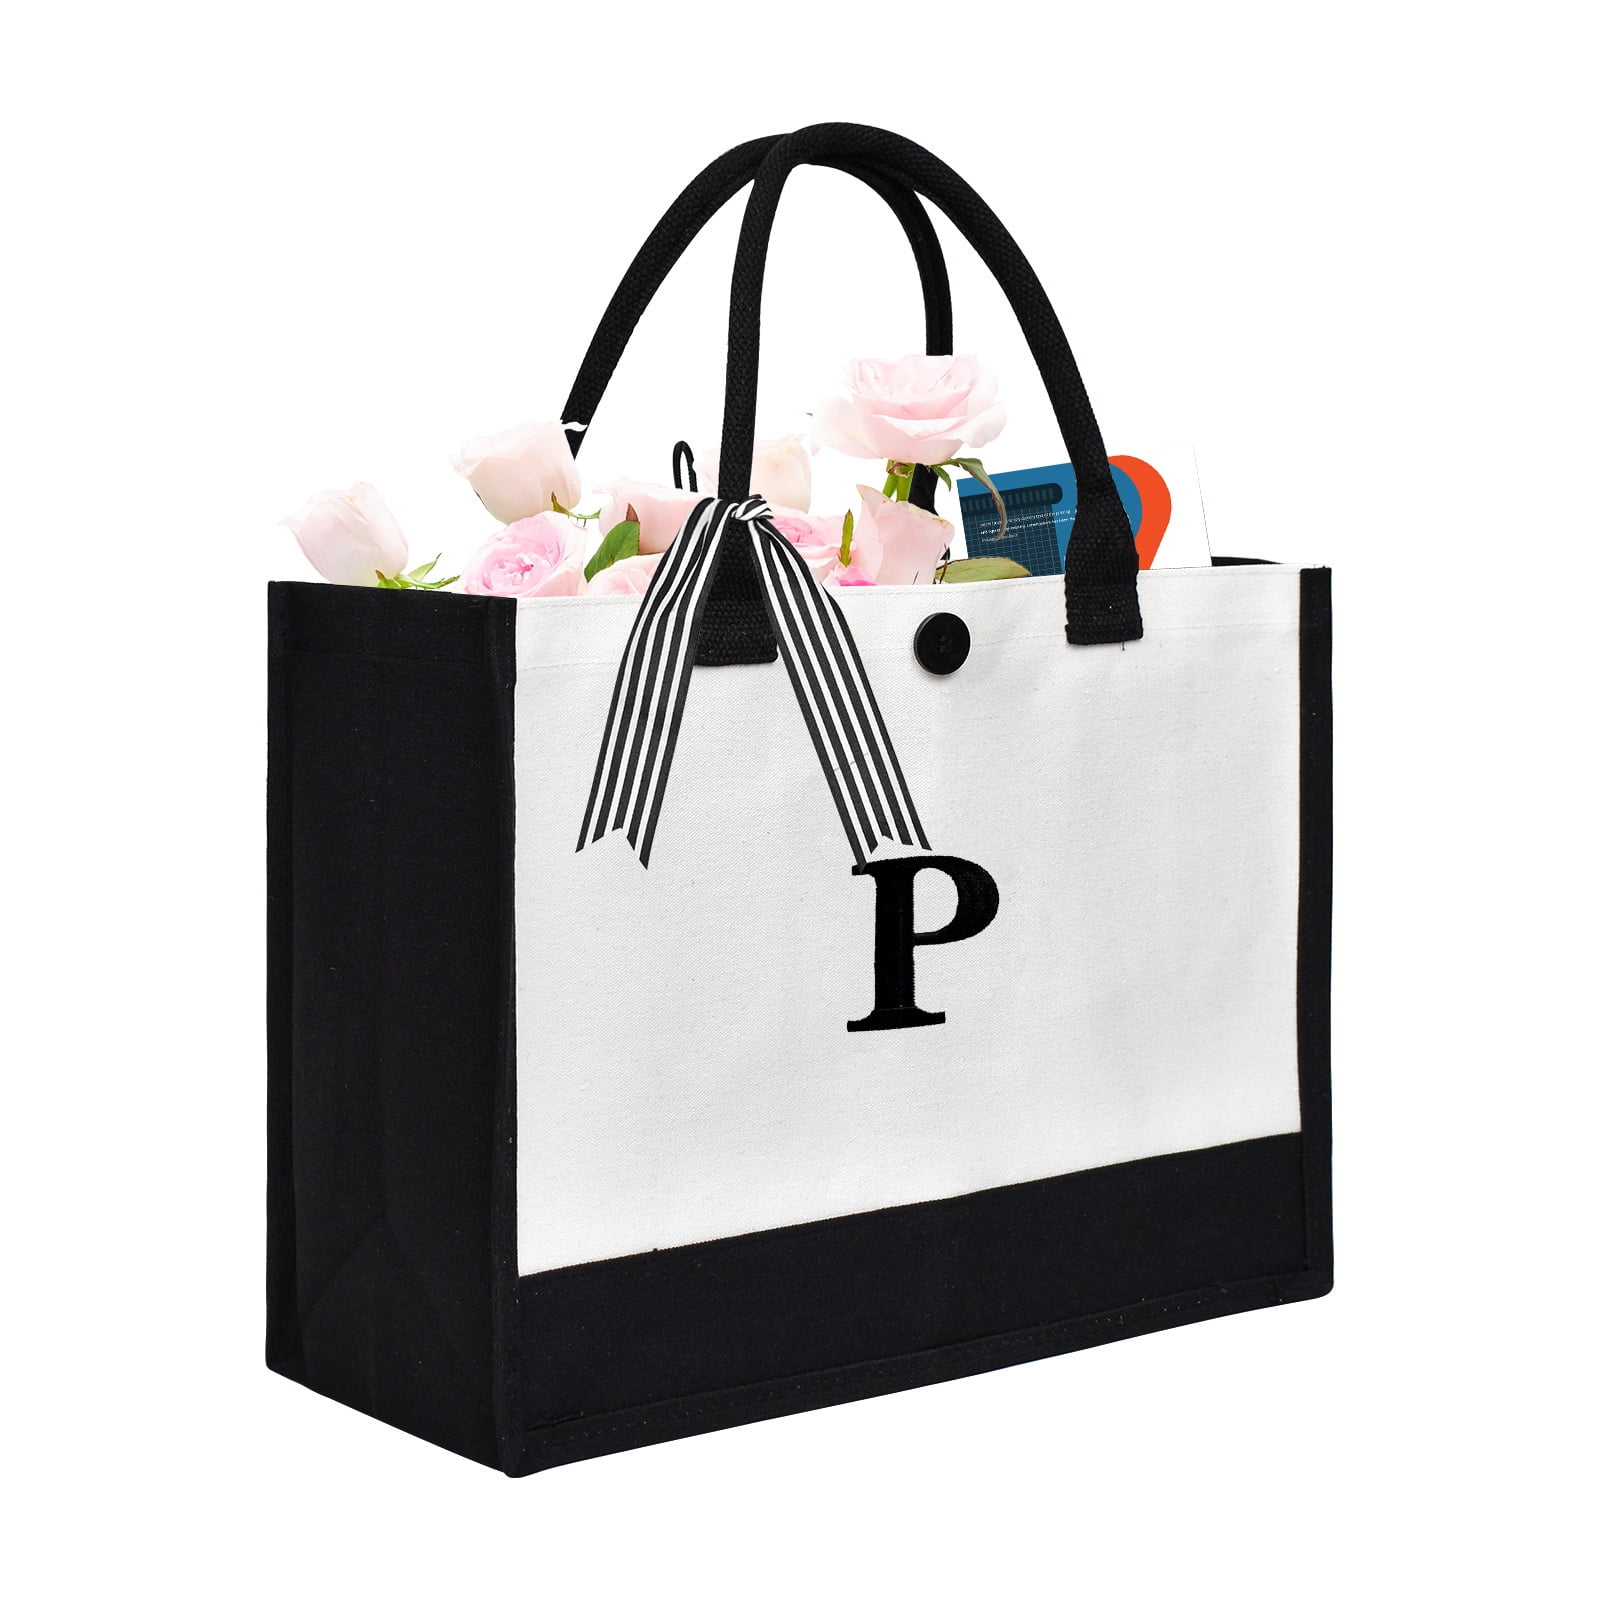 Framed Louis Vuitton 2019 holiday bag  Holiday bag, Holiday shopping bags,  Holiday